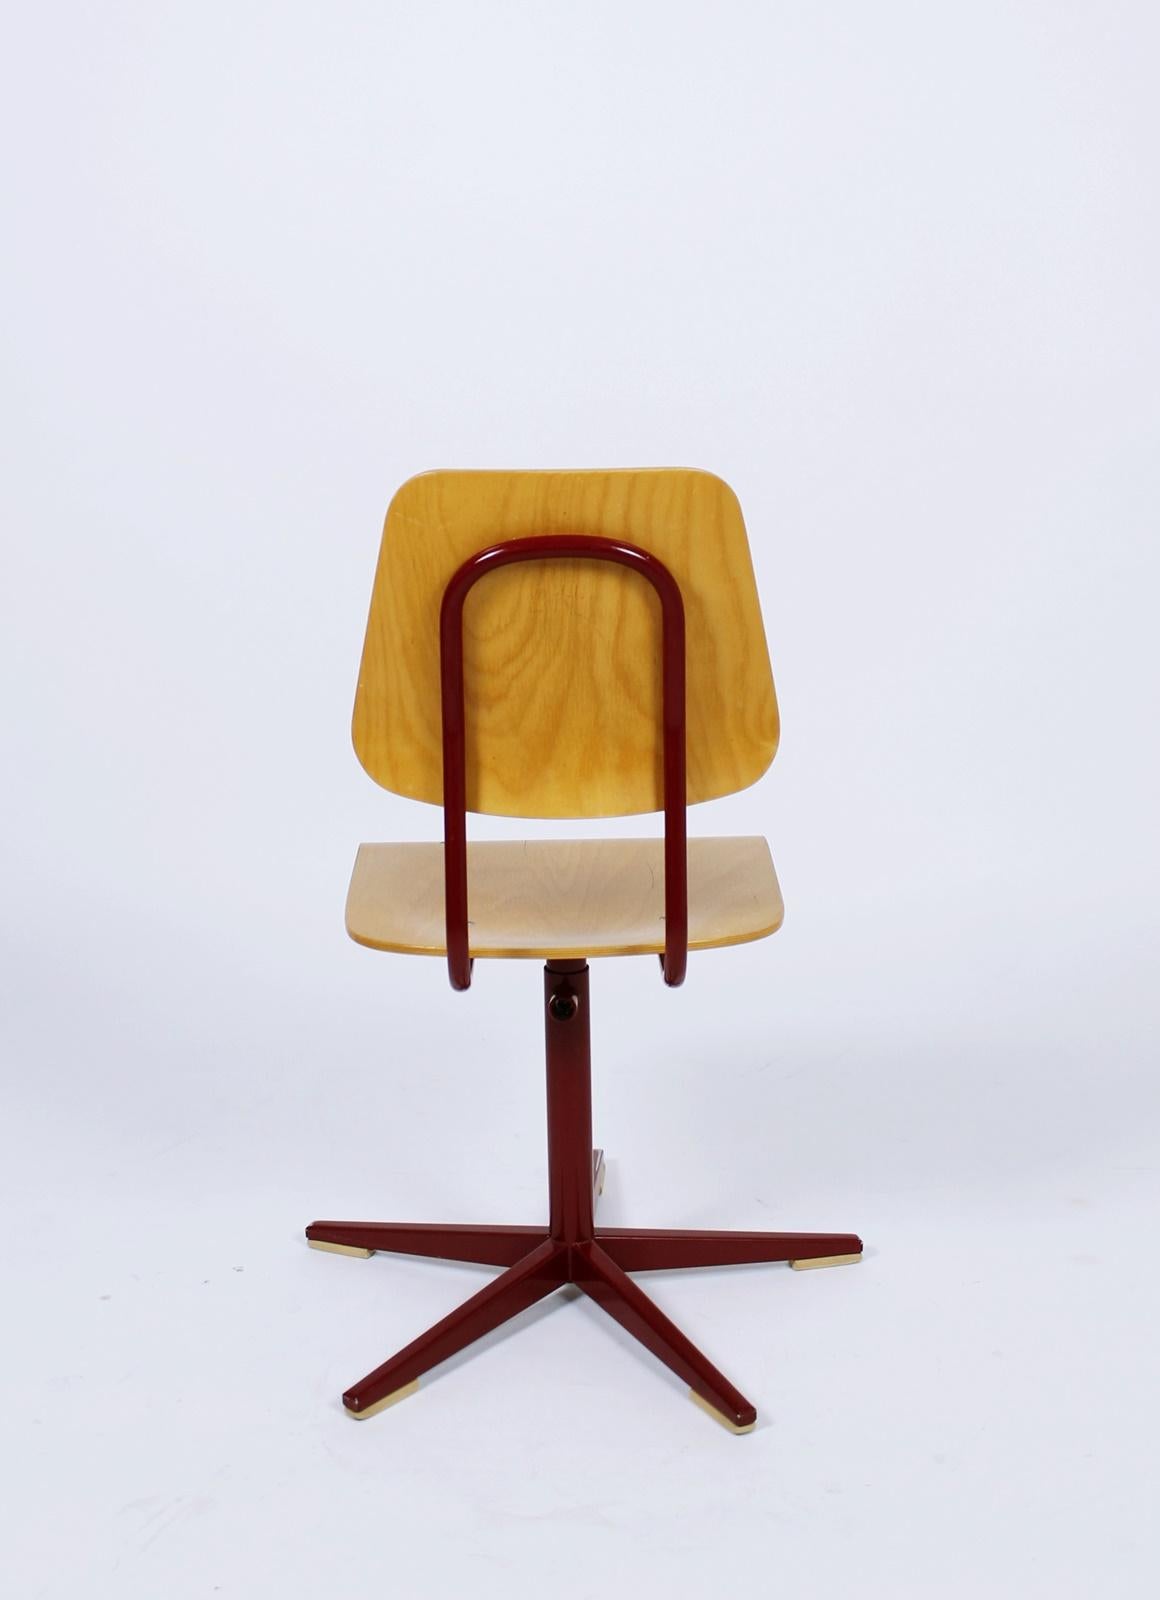 Steel Height Adjustable School Chairs by Embru 1960s Switzerland